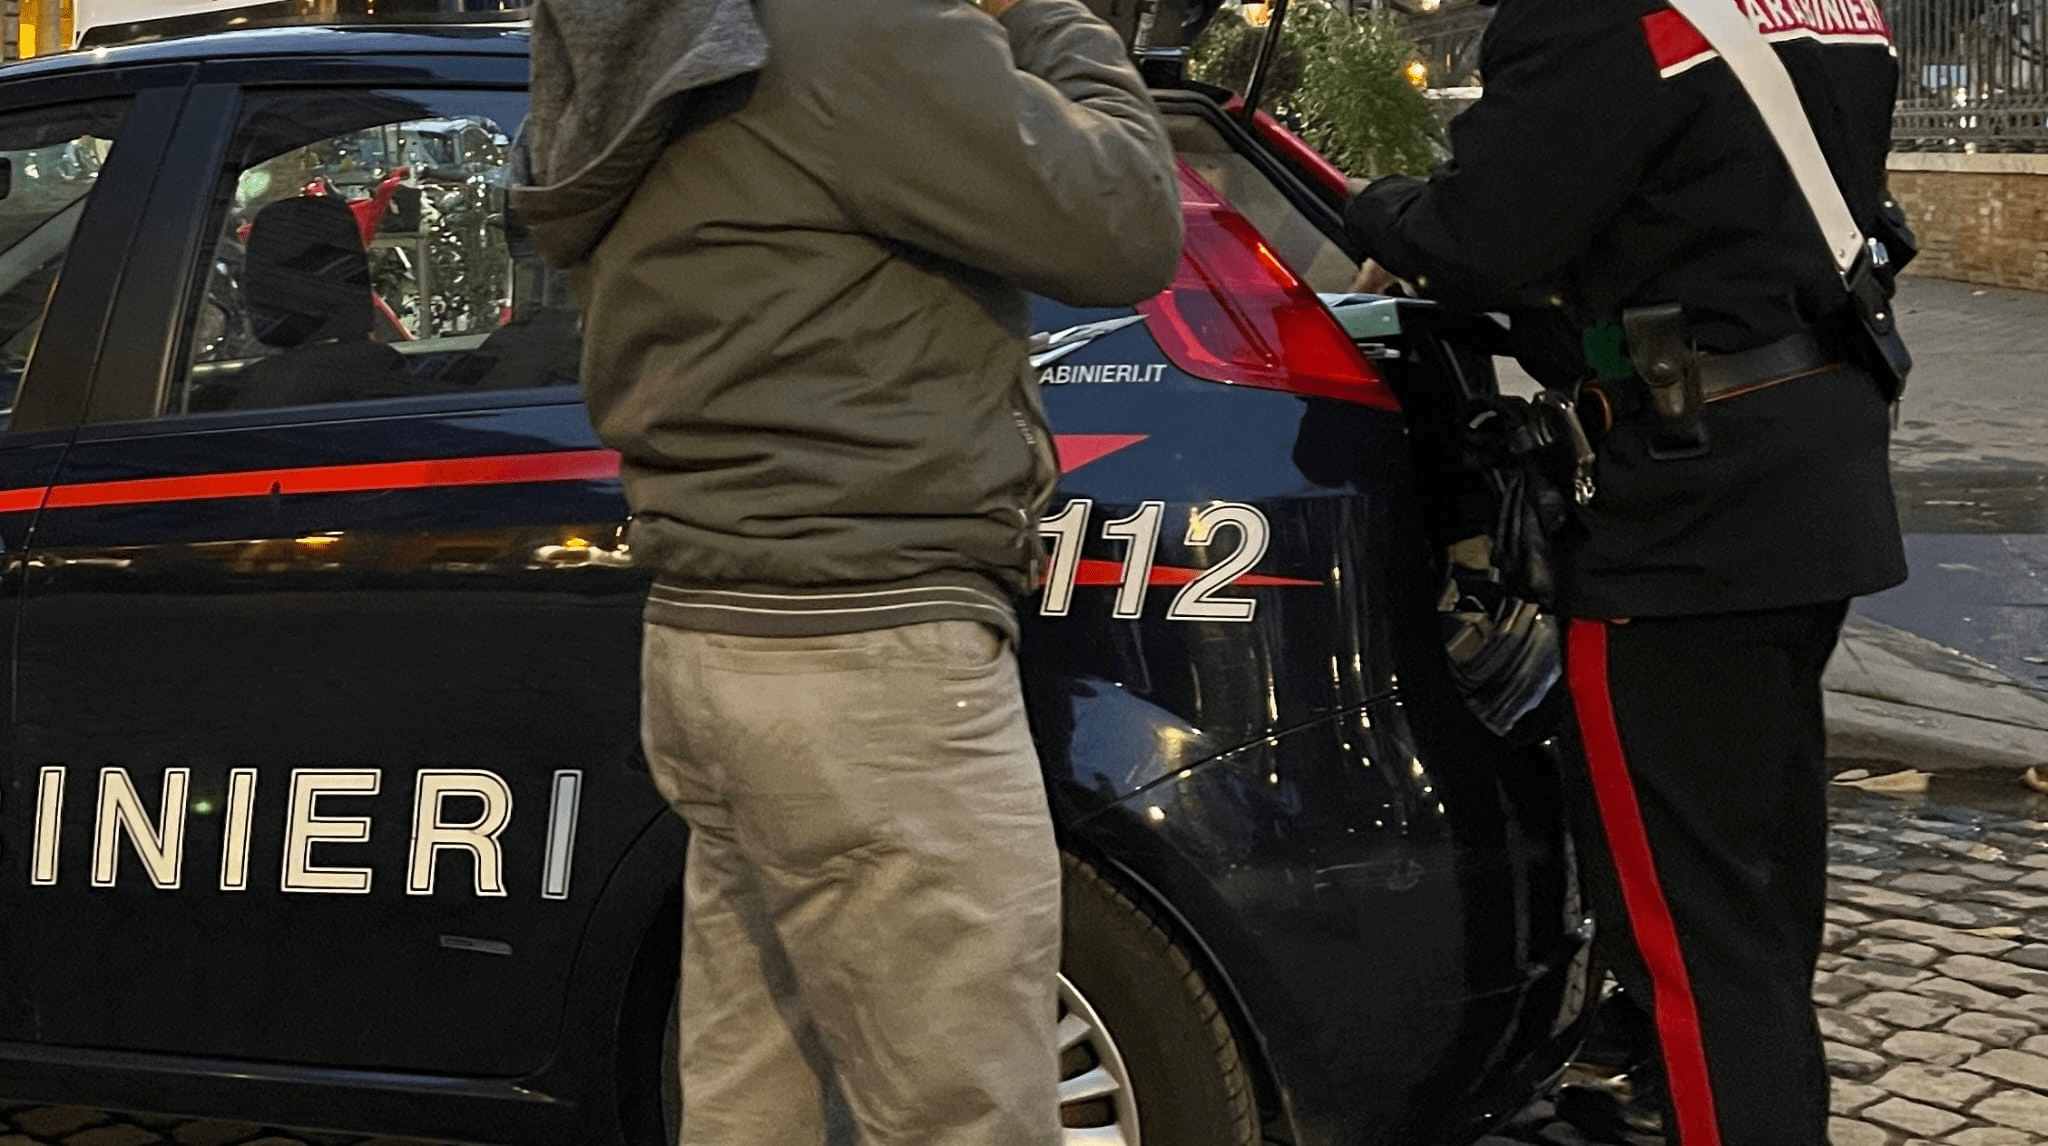 arrestato 56enne di ladispoli: aveva 4 carte d'identità false